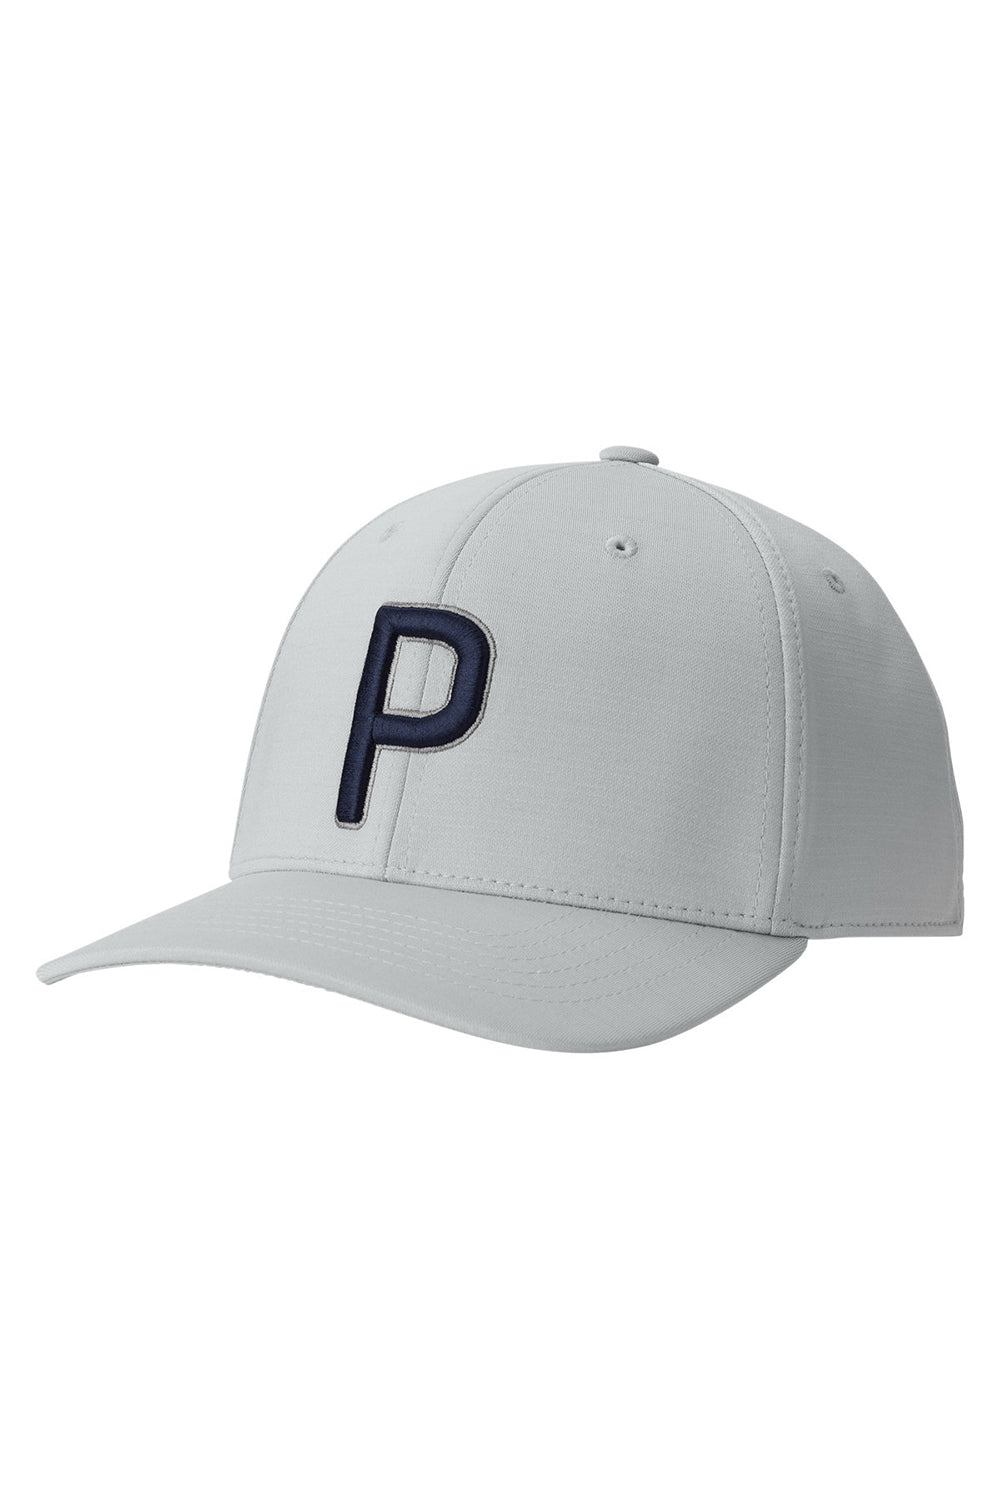 Puma 22537 Mens P Snapback Hat High Rise Grey Front